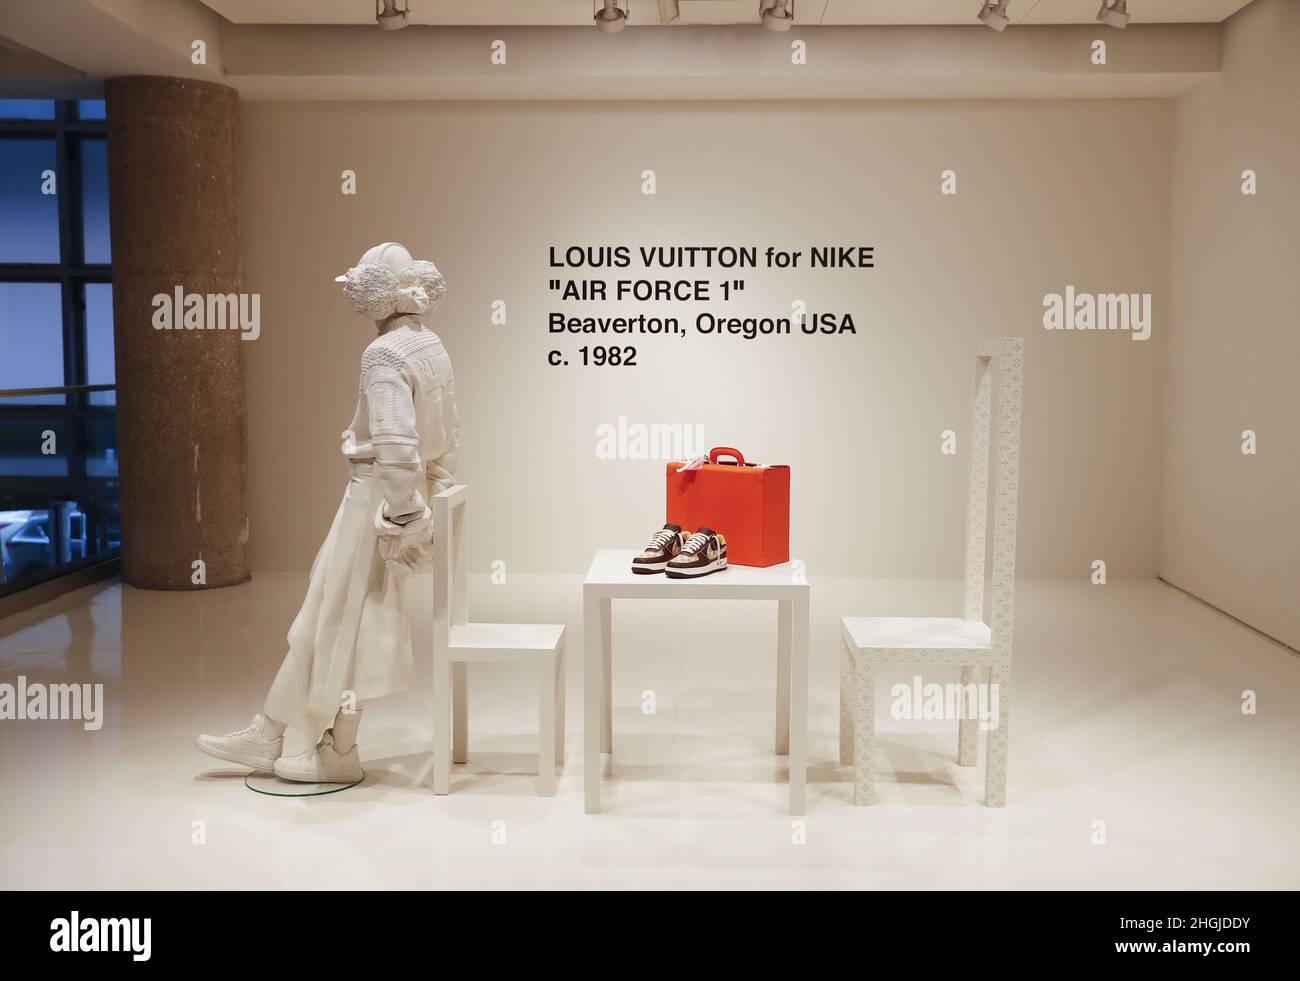 The Wait is Over: The Virgil Abloh-designed Louis Vuitton LV